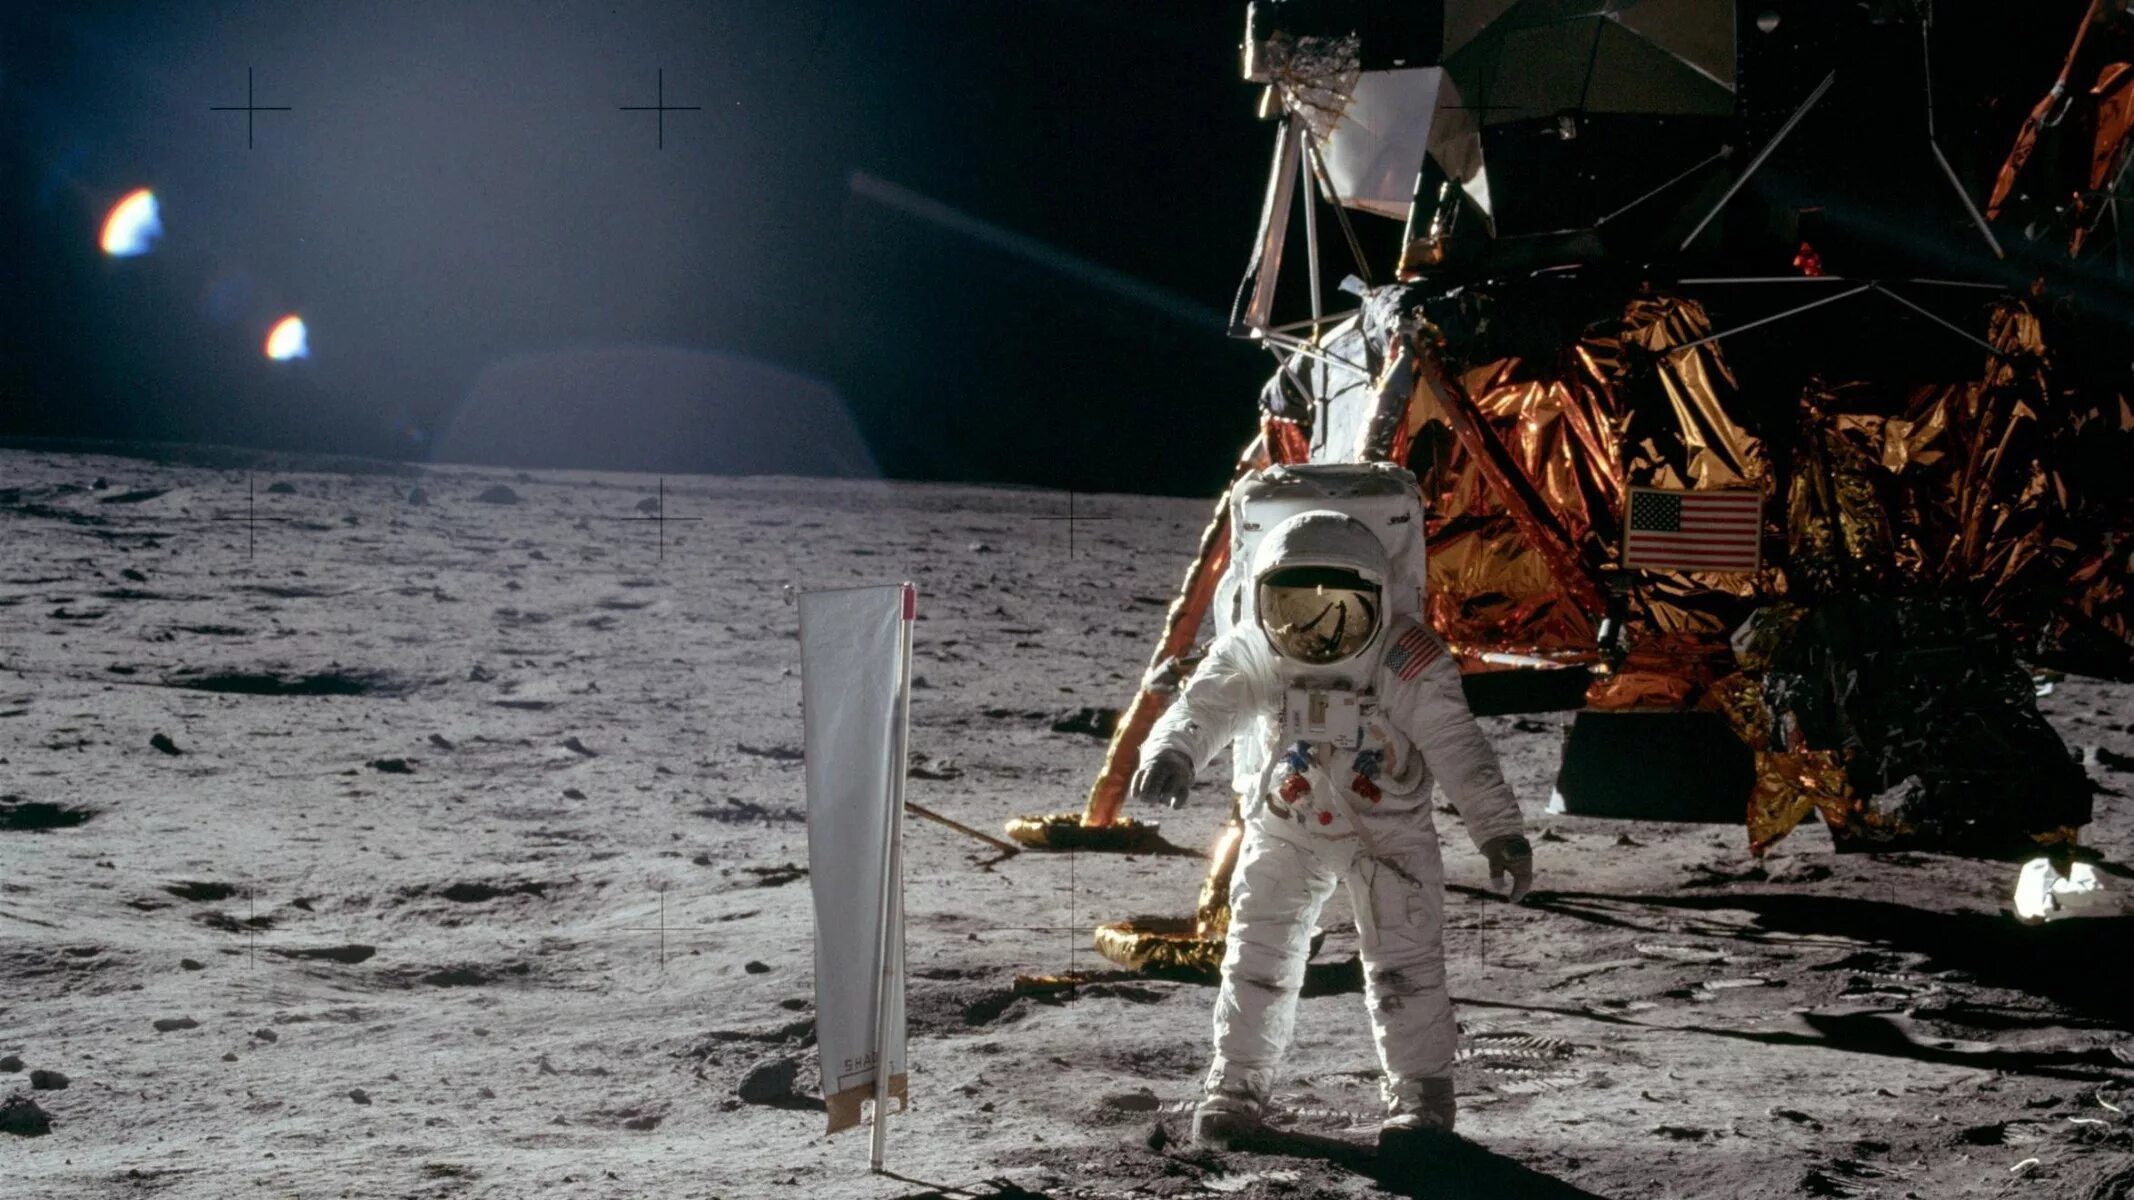 Какой аппарат совершил первую посадку на луну. Апполо 11 на Луне.